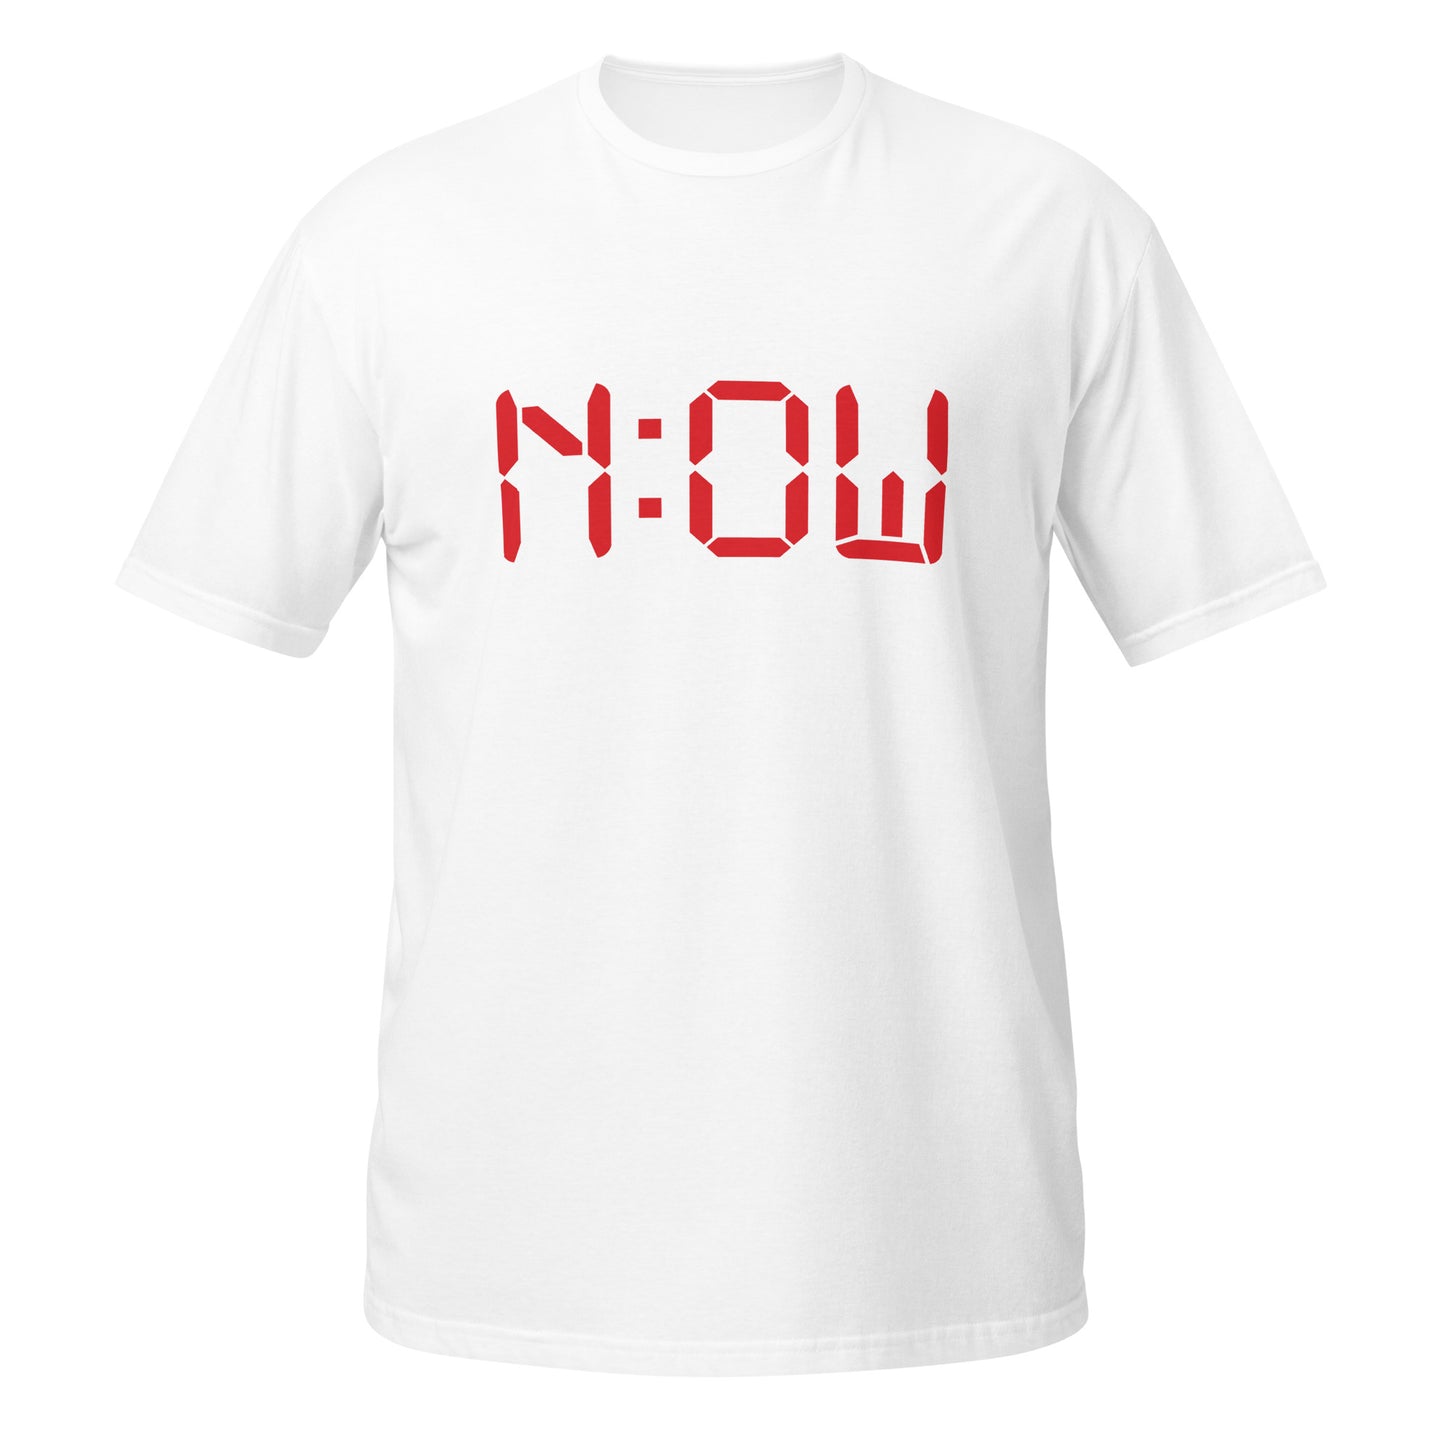 "Now" Unisex T-Shirt